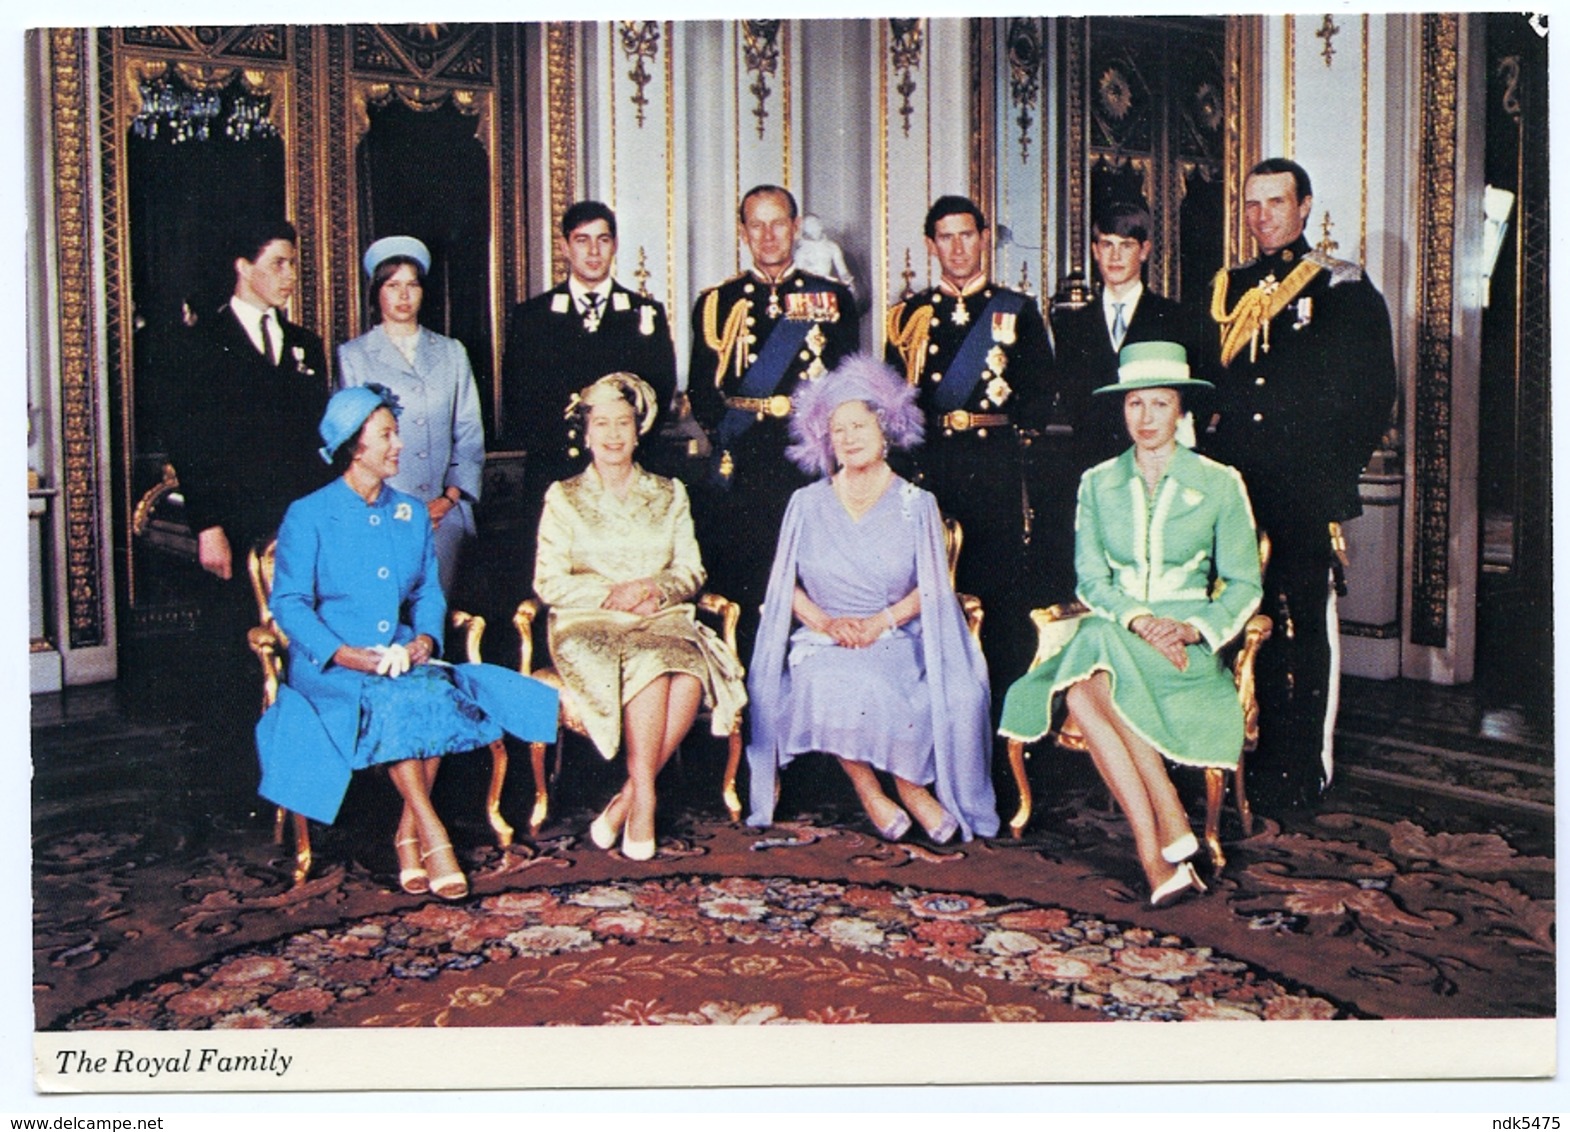 THE ROYAL FAMILY - Royal Families